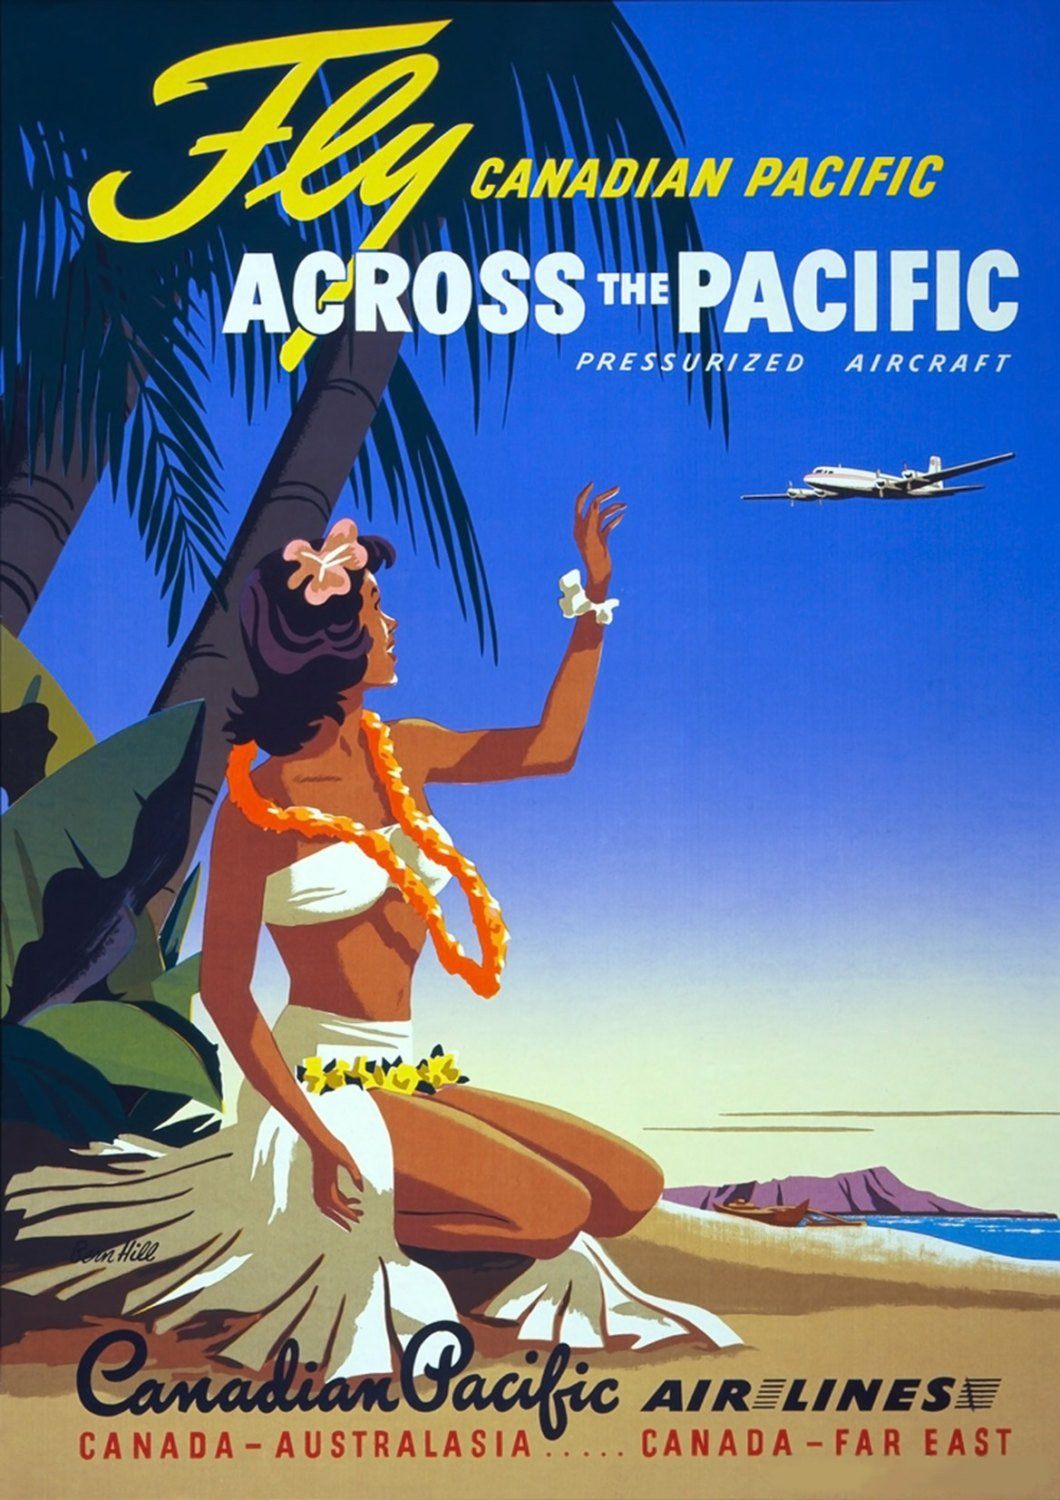 PACIFIC ISLAND POSTER: Vintage South Seas Travel Advert - Pimlico Prints